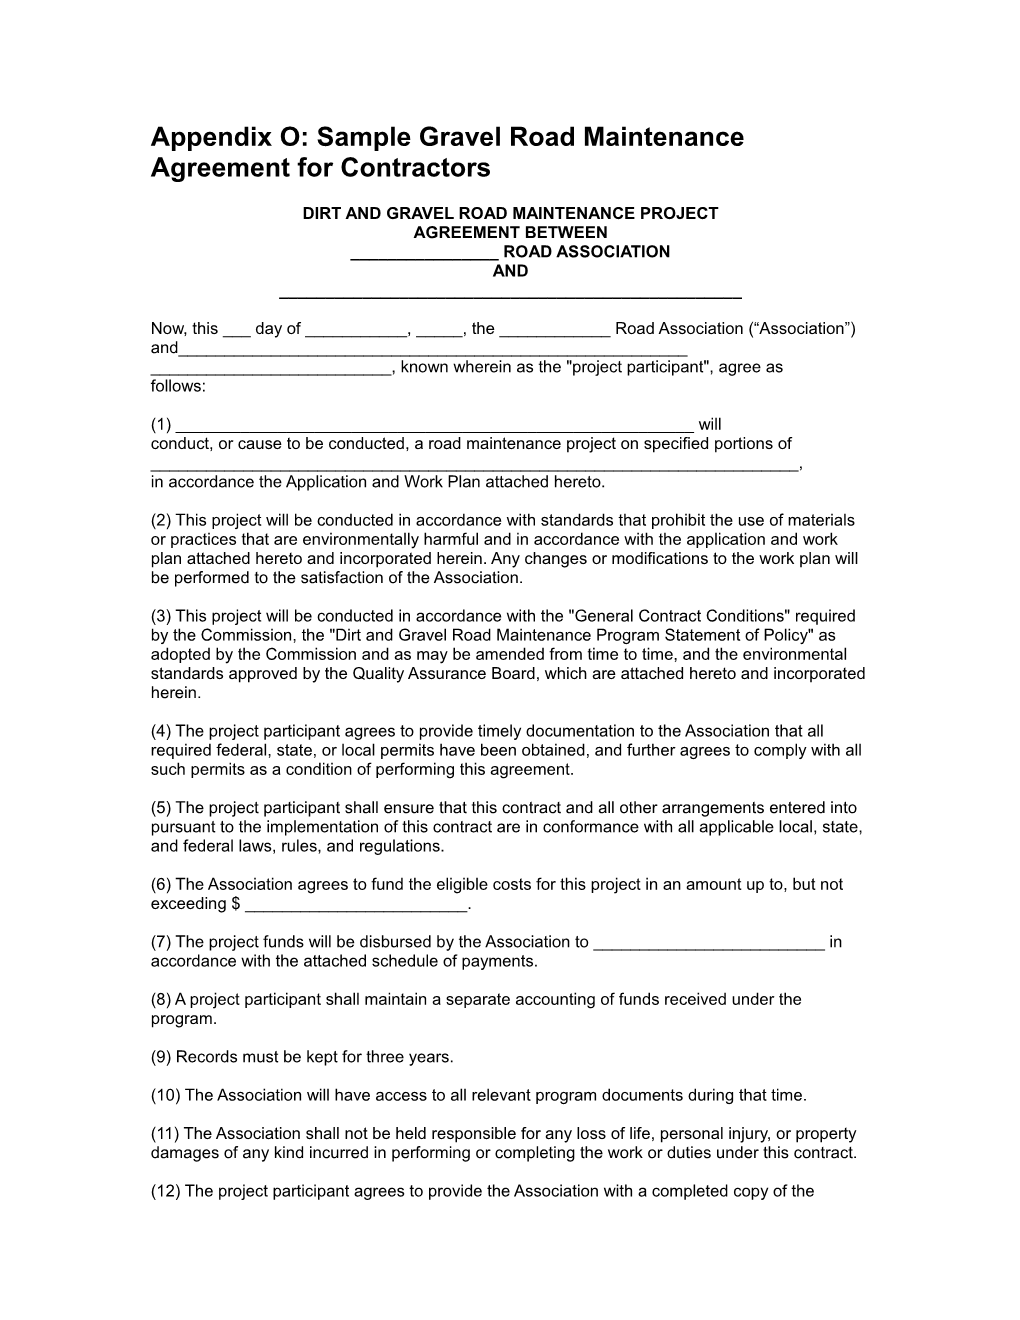 Appendix O: Sample Gravel Road Maintenance Agreement for Contractors